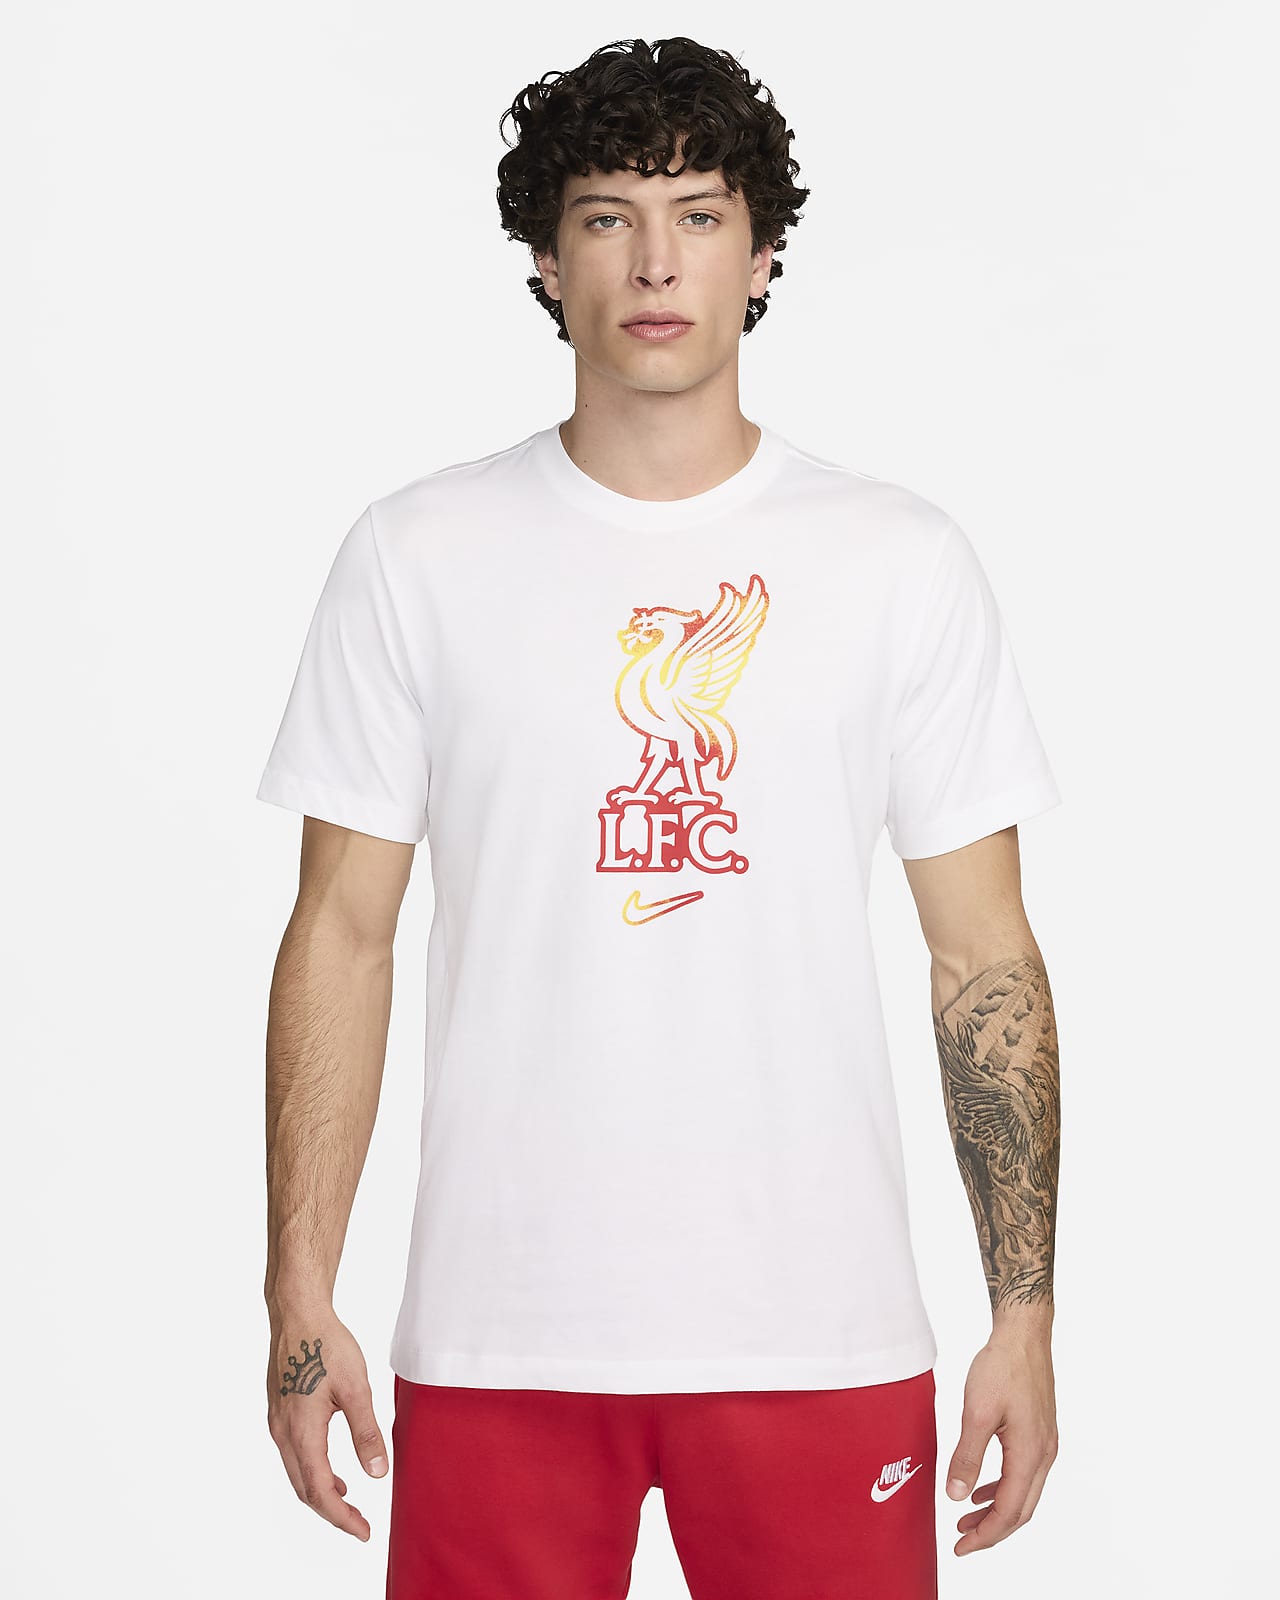 Liverpool FC Men's Nike Soccer T-Shirt